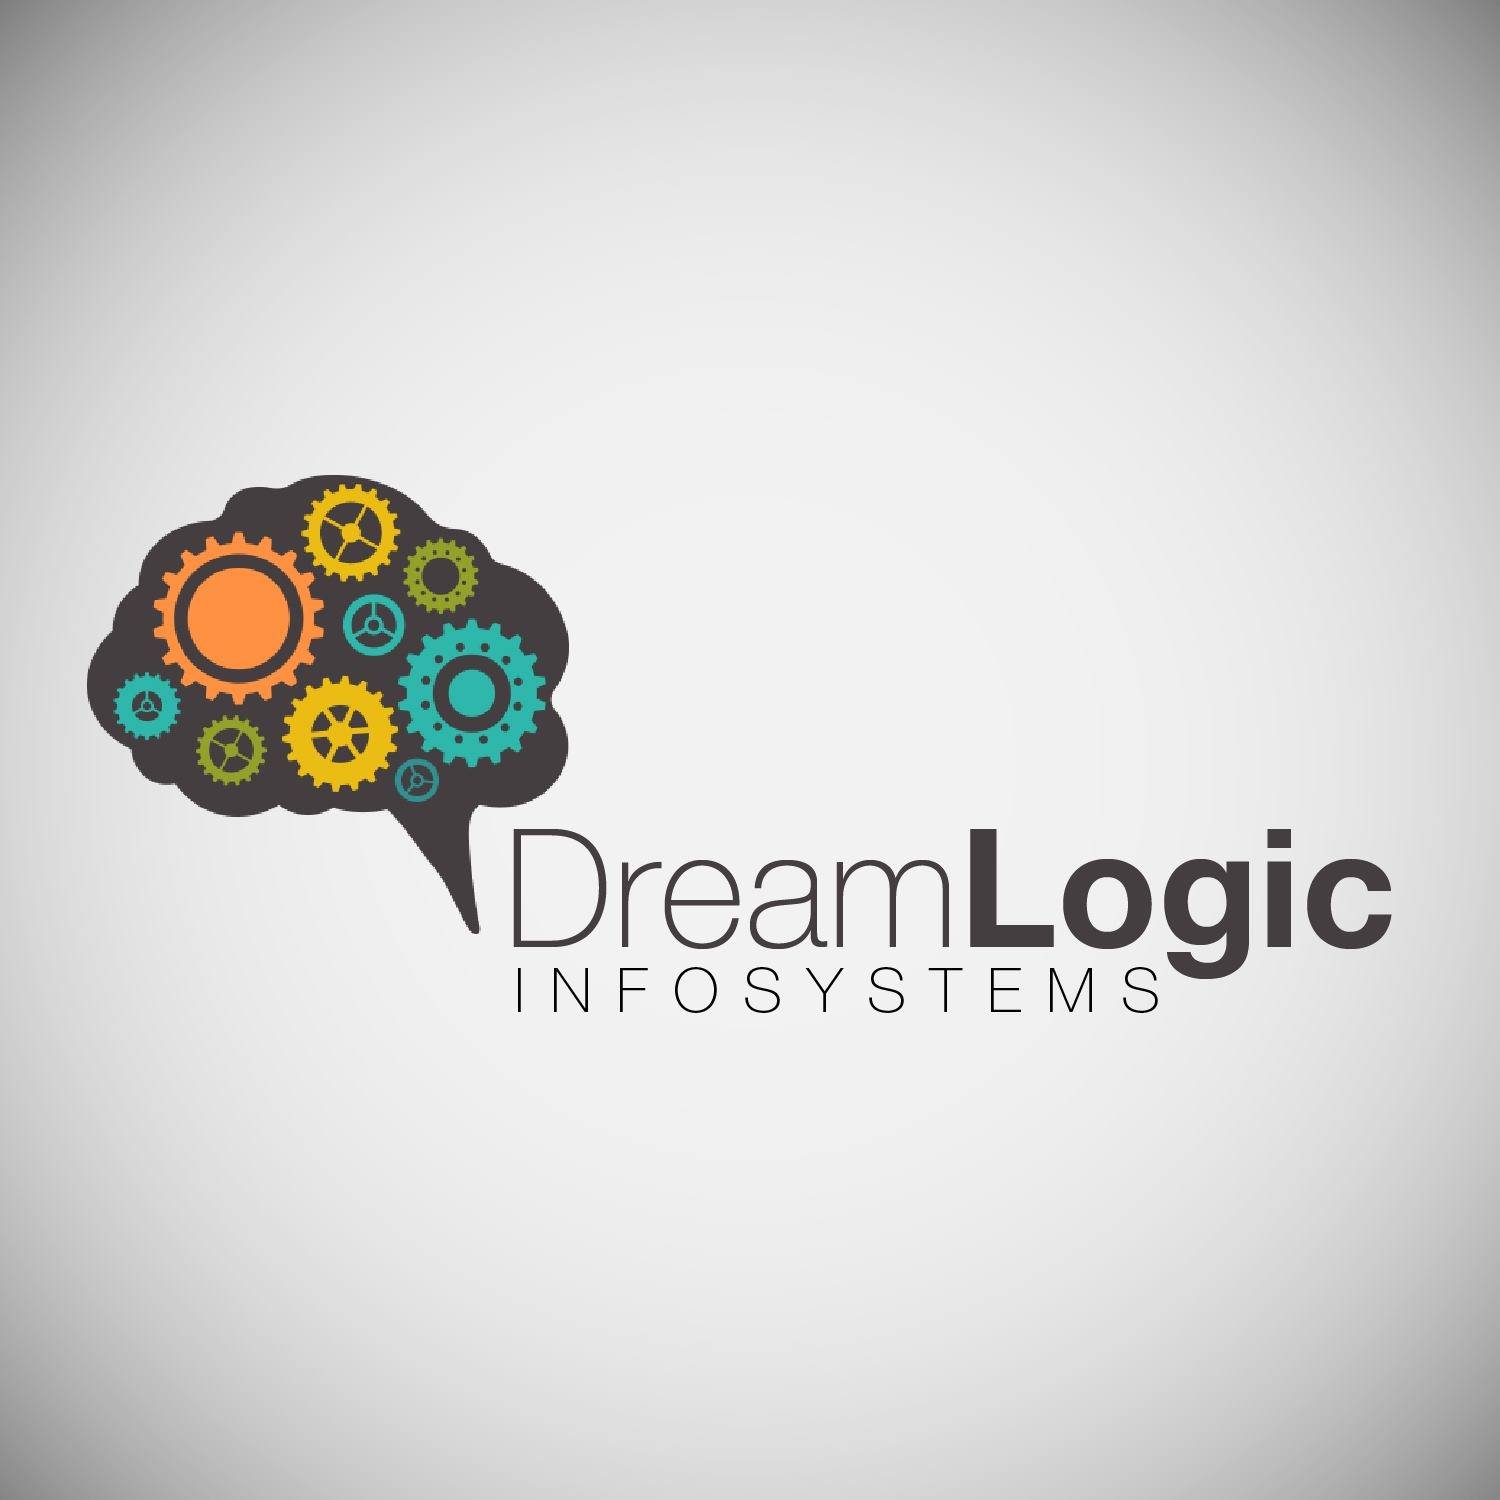 Dreamlogic Infosystems